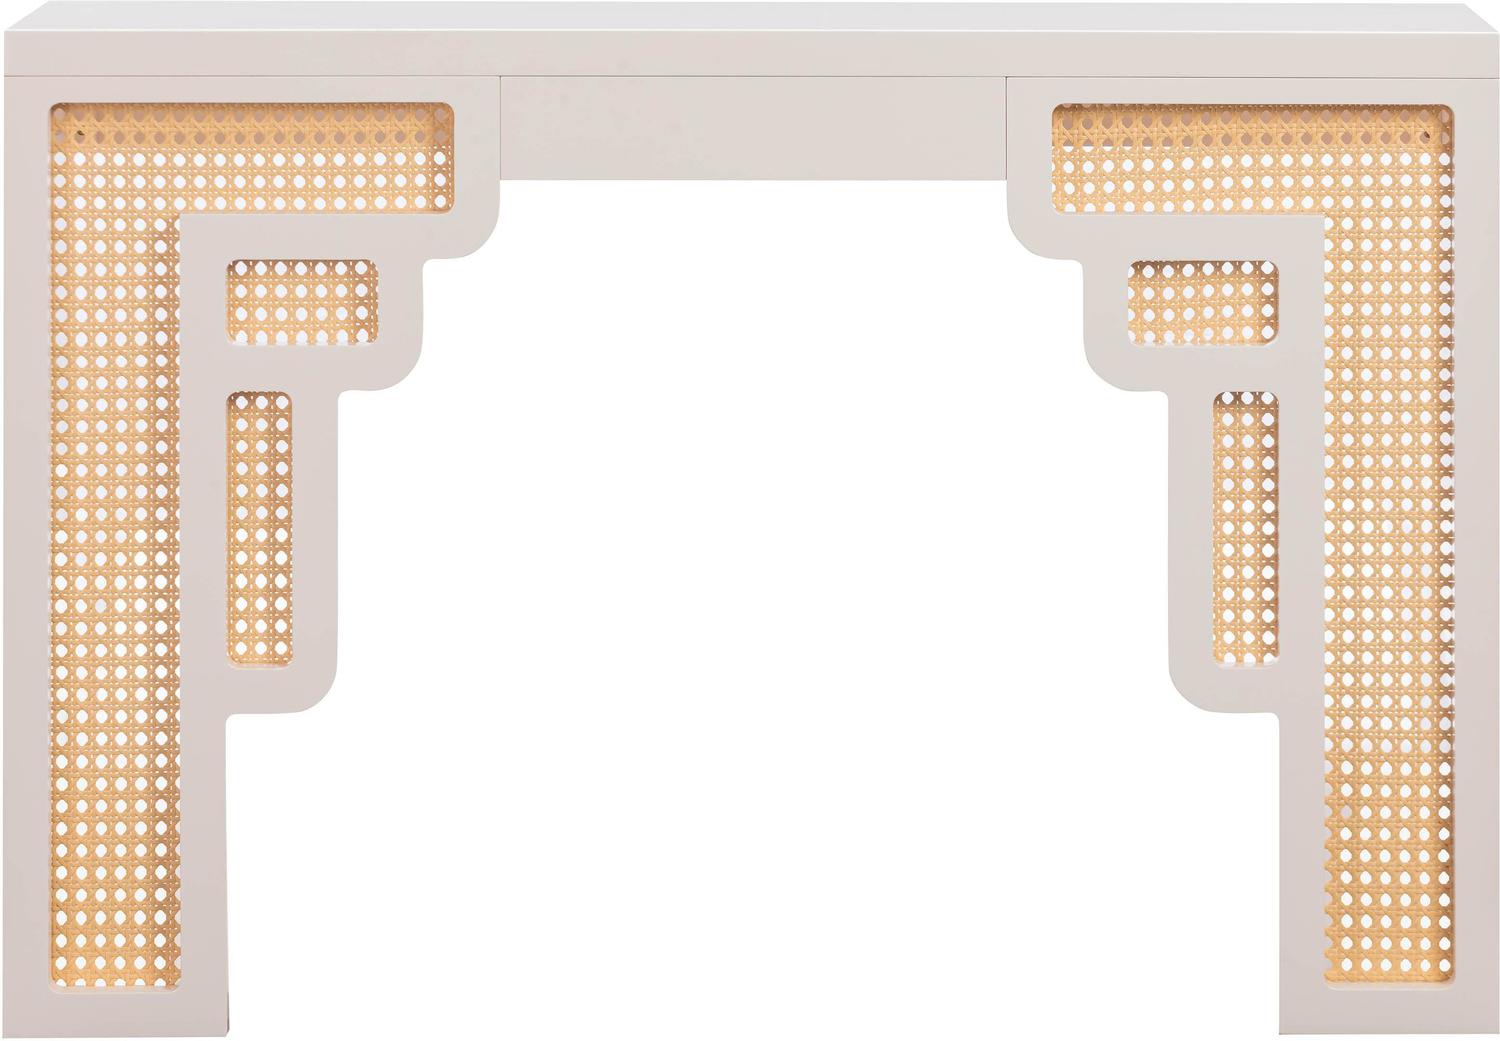 iron frame table Contemporary Design Furniture Console Tables Cream